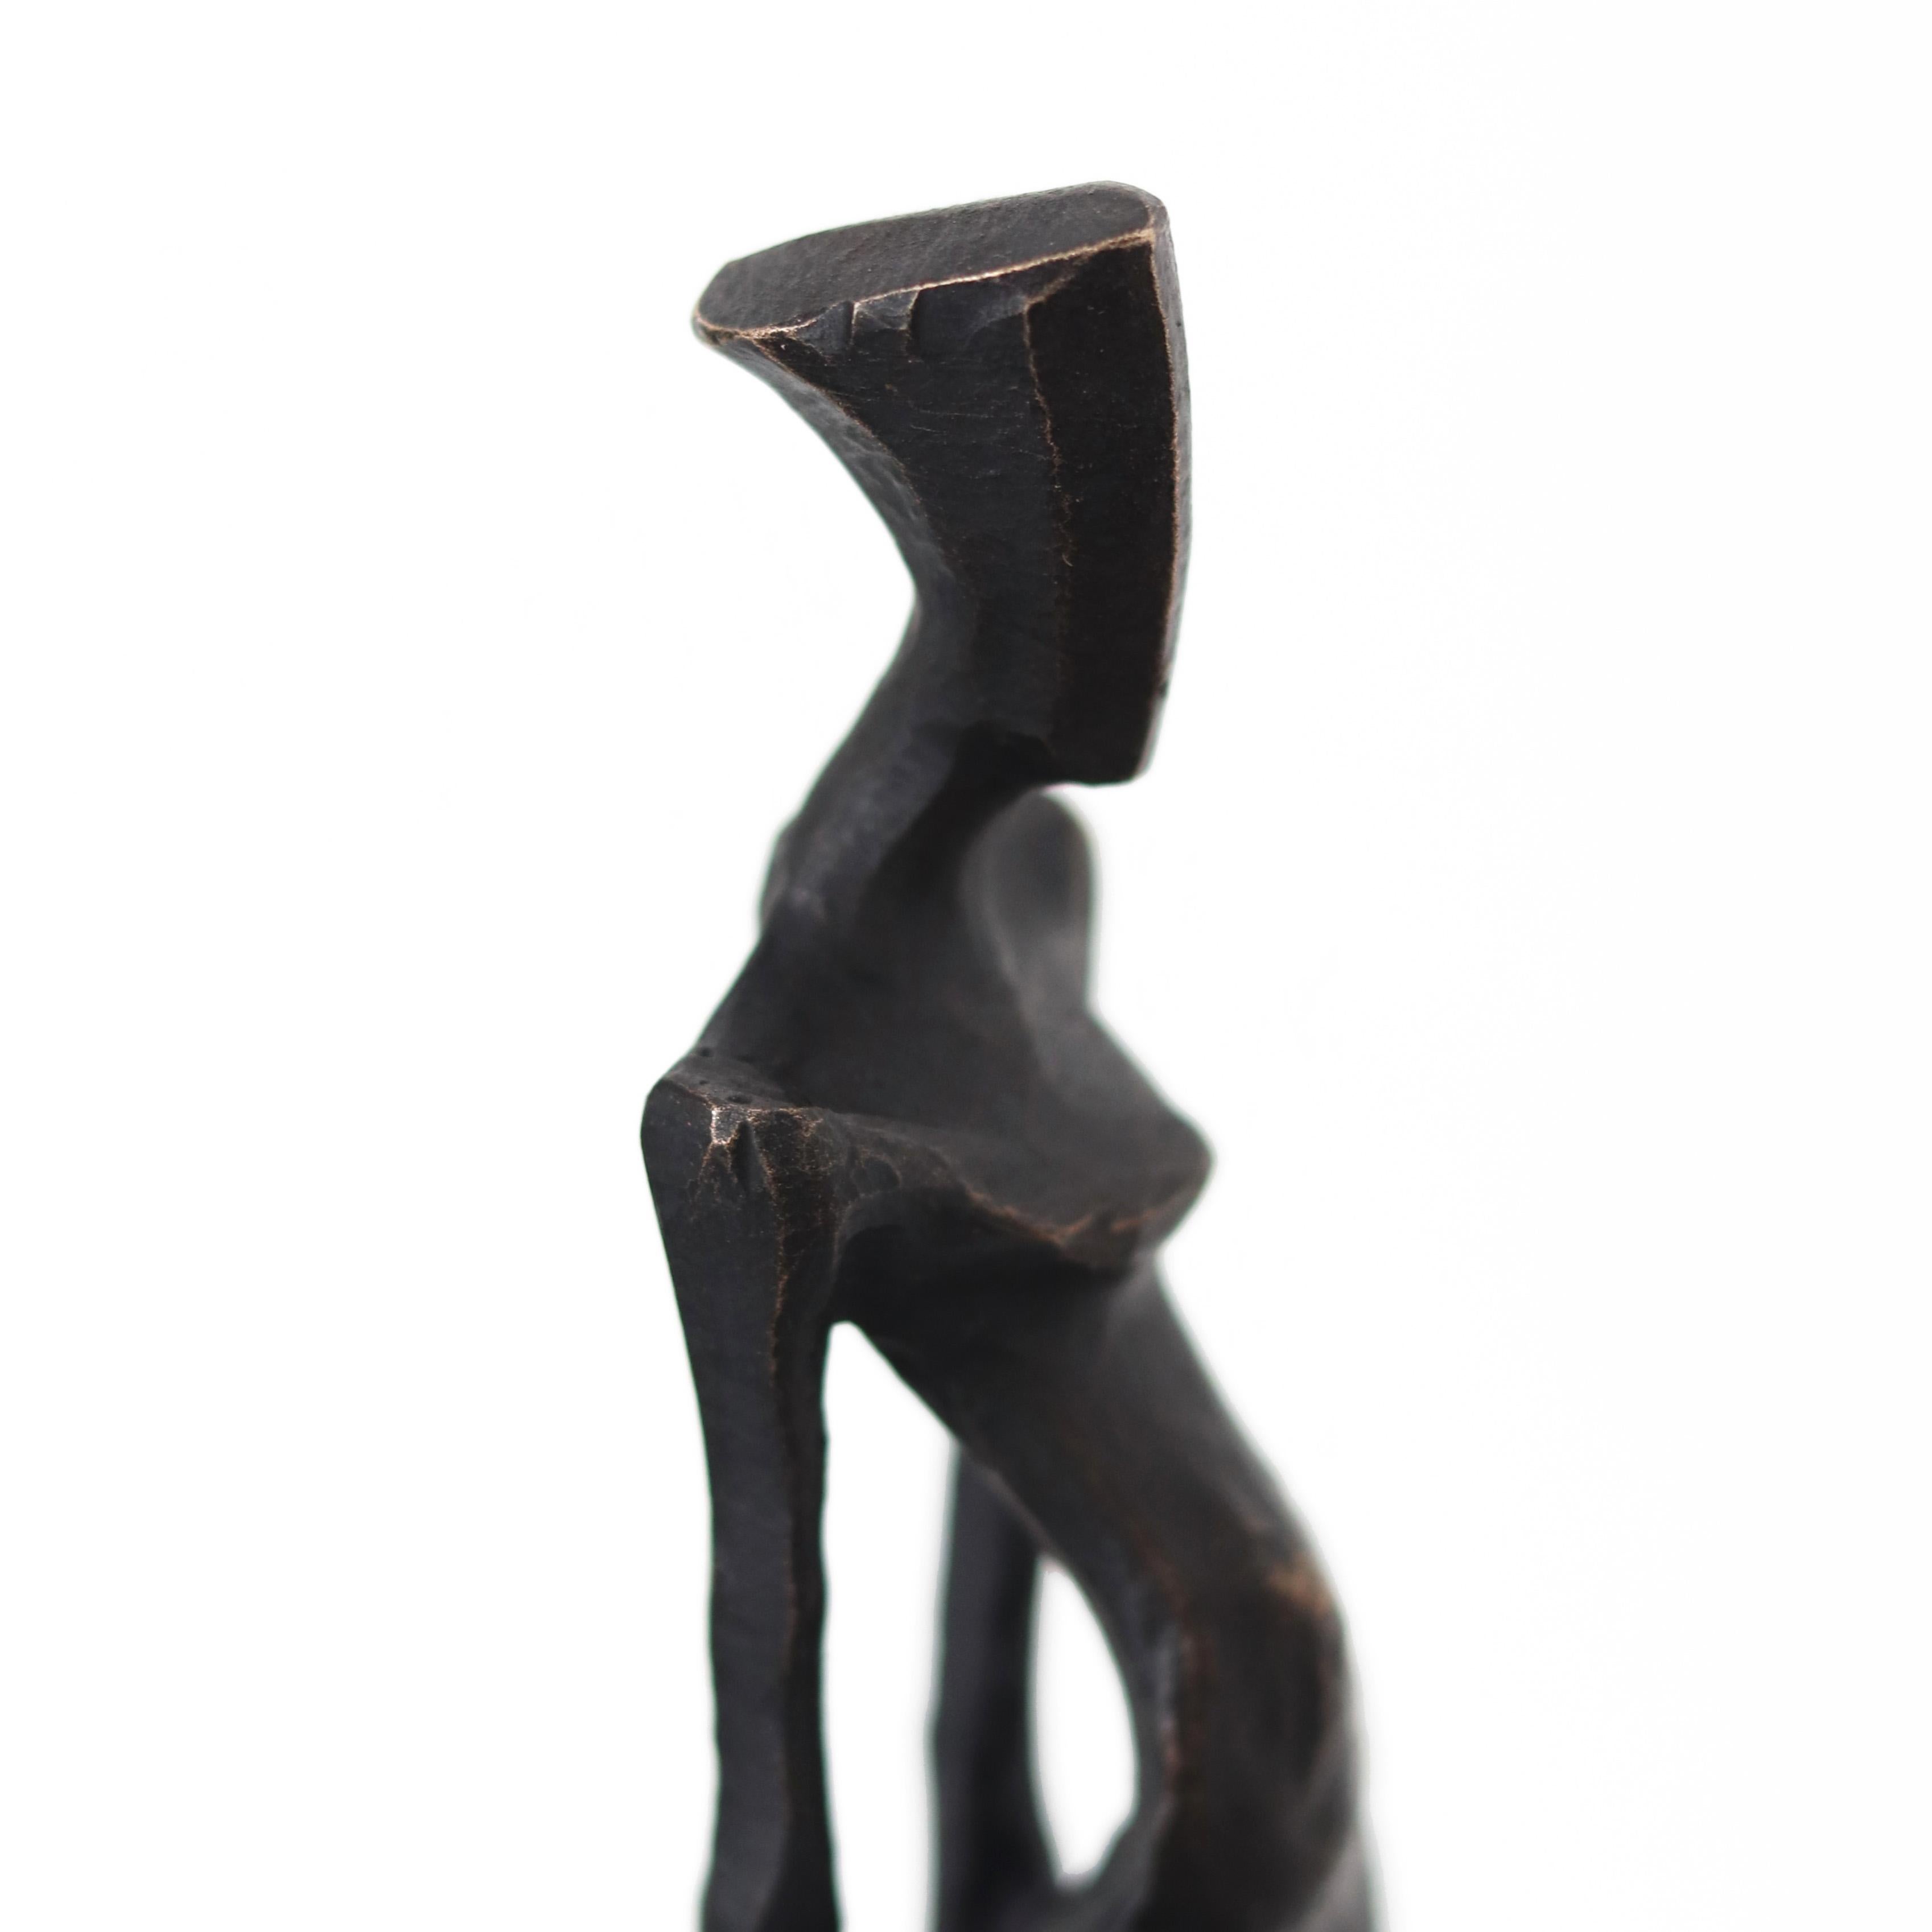 Héra  - gracieuse sculpture figurative moderne en bronze - Art et design d'origine  - Abstrait Sculpture par Nando Kallweit